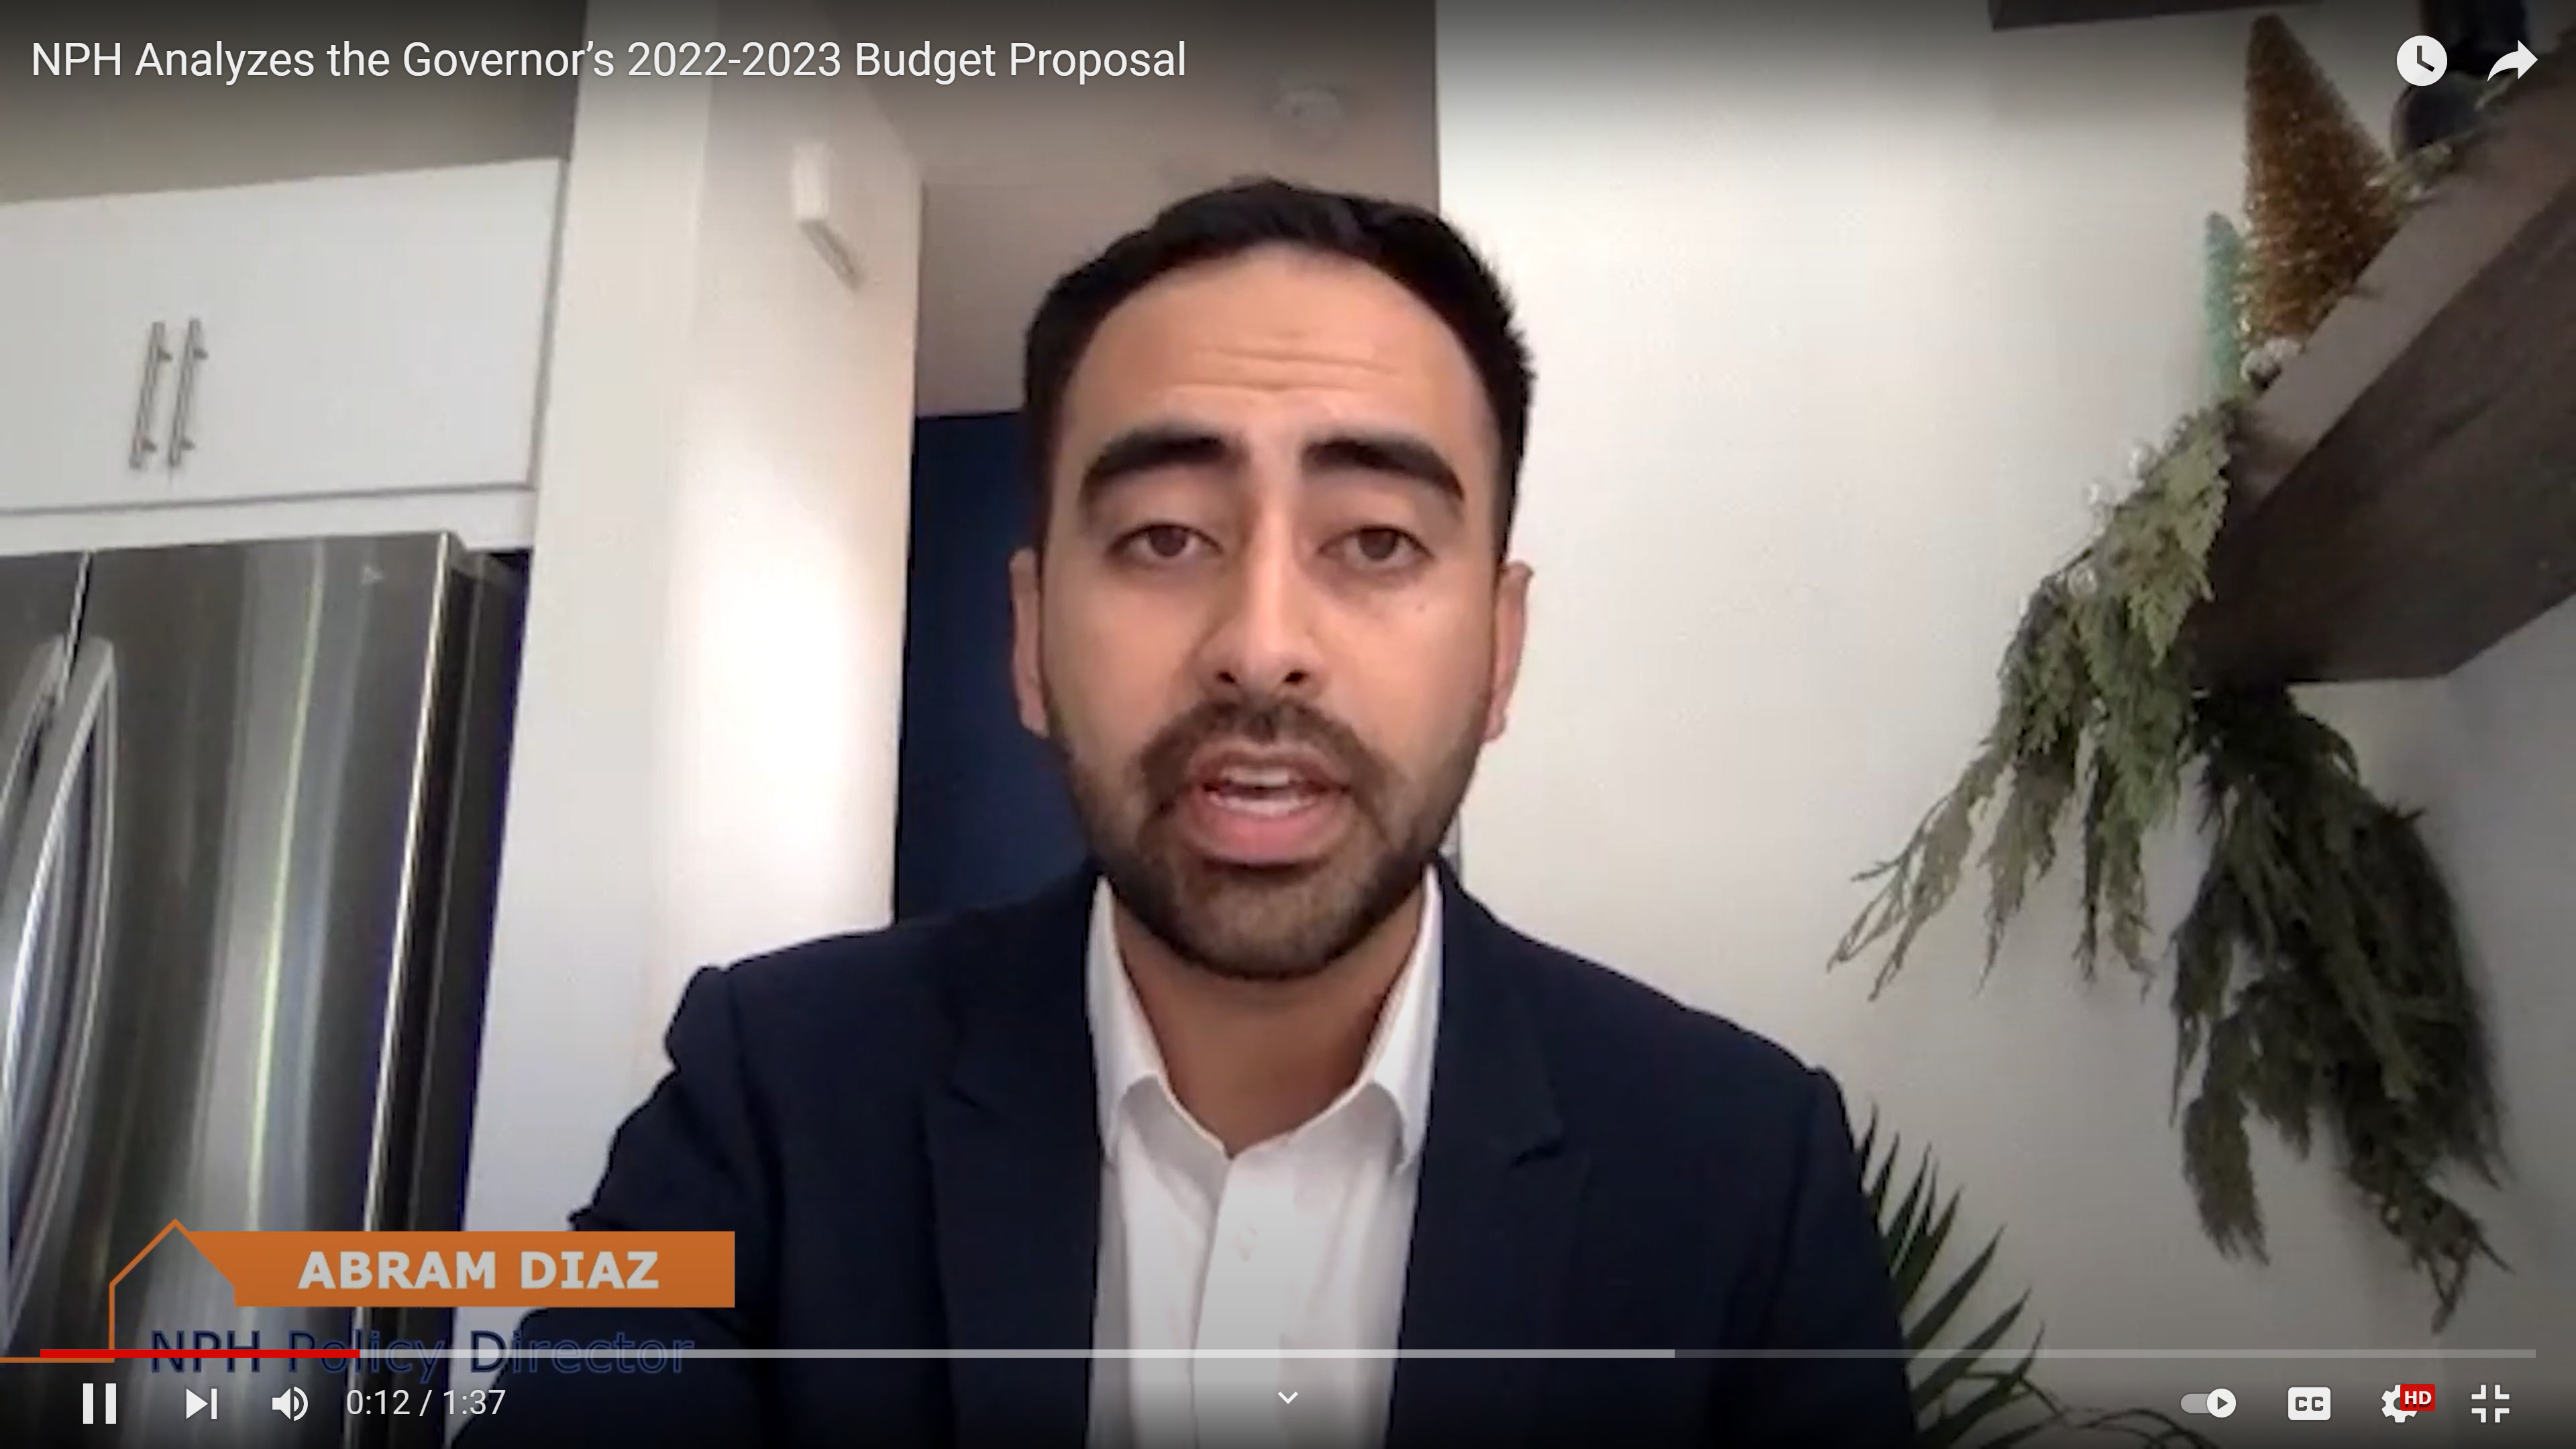 Screenshot of Abram Diaz discussing budget